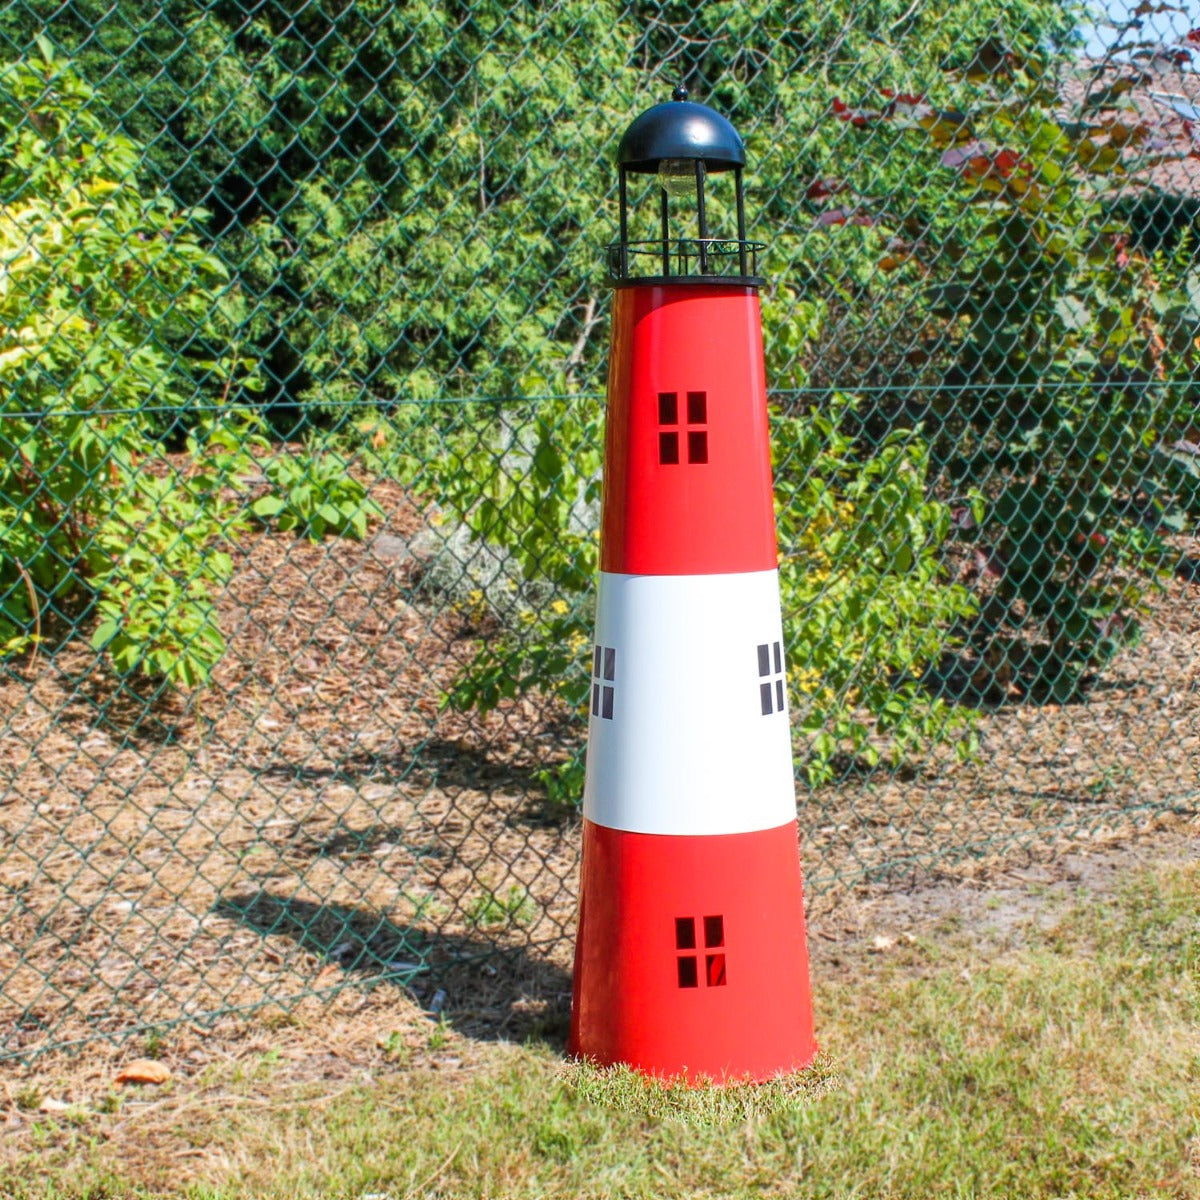 Leuchtturm Garten 120 cm mit Licht Solar Leuchtturm Metall Maritime Deko mit LED Beleuchtung Gartendeko Maritim